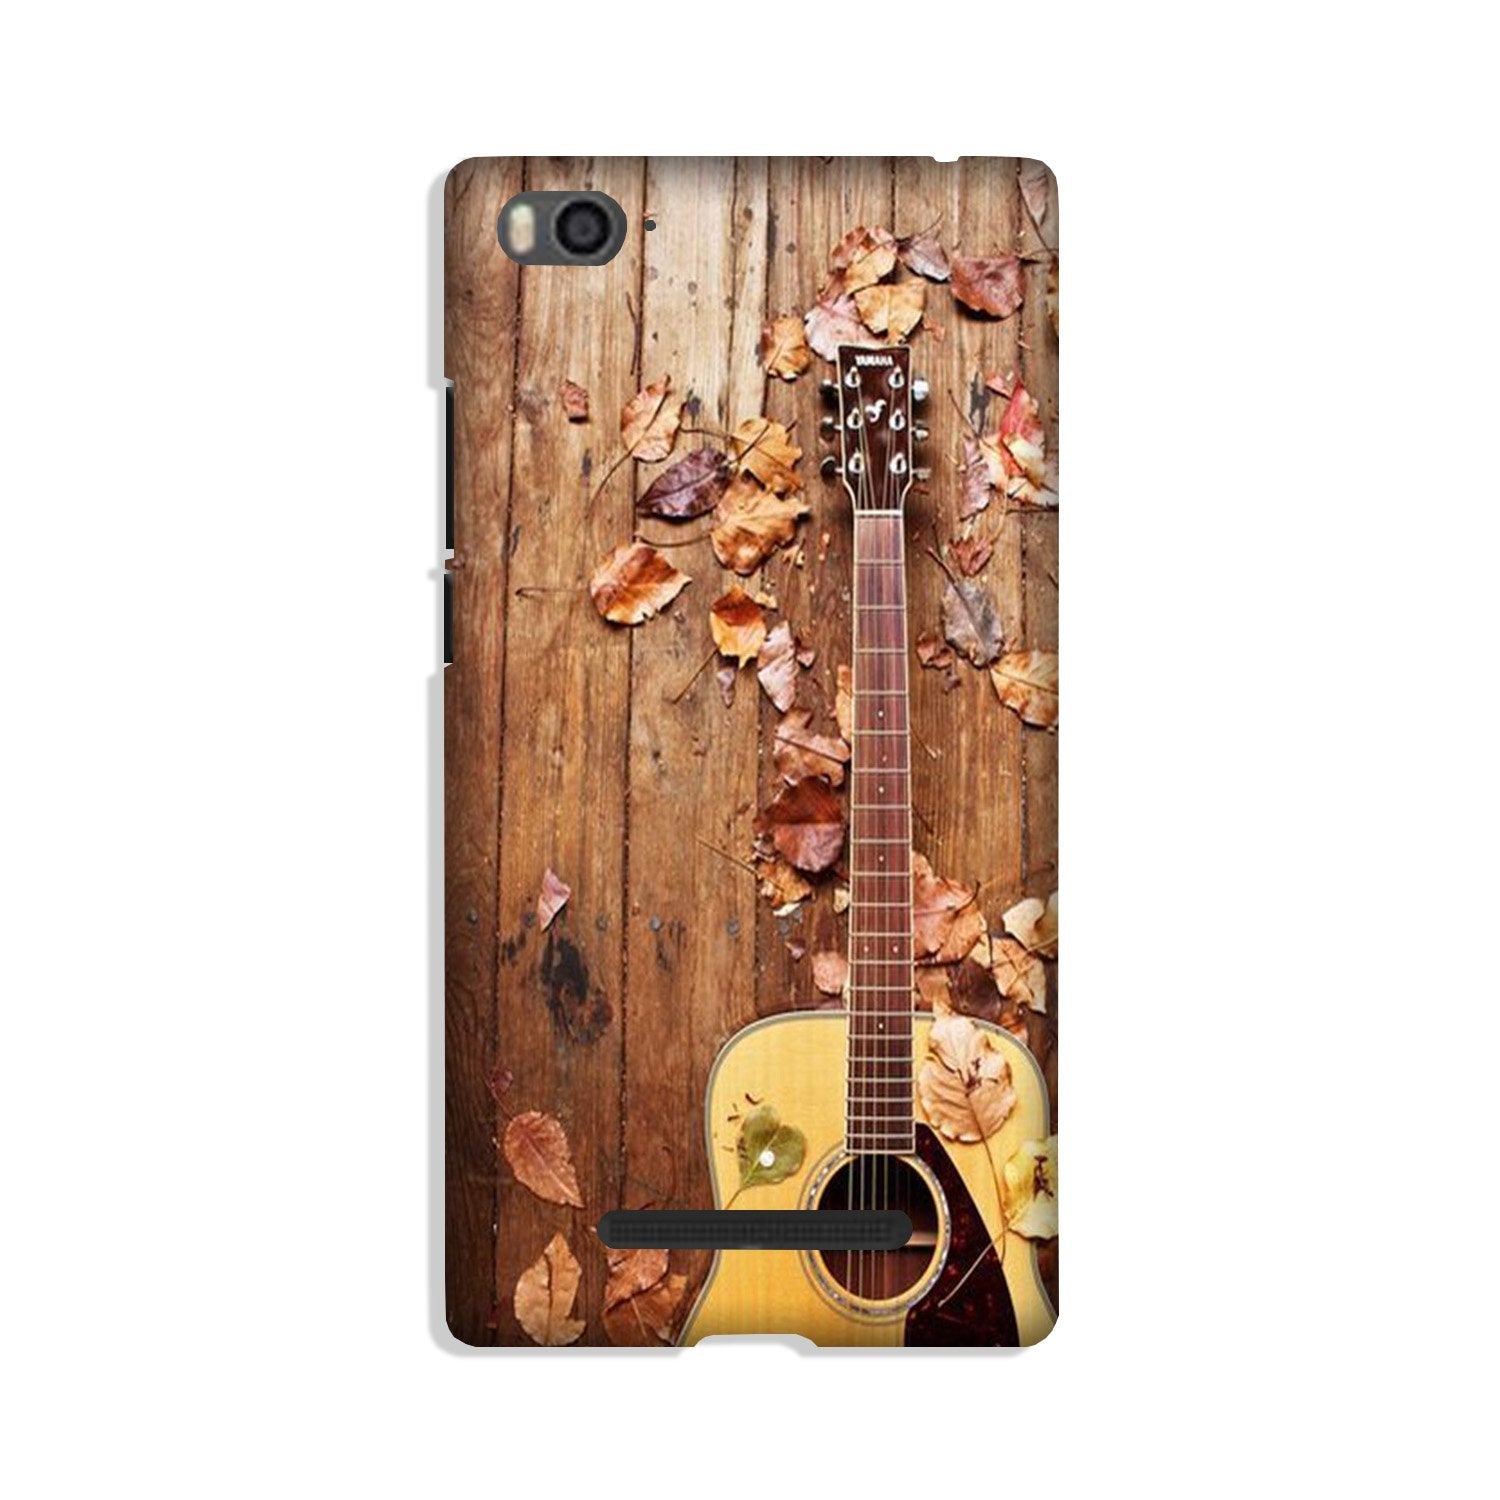 Guitar Case for Xiaomi Mi 4i